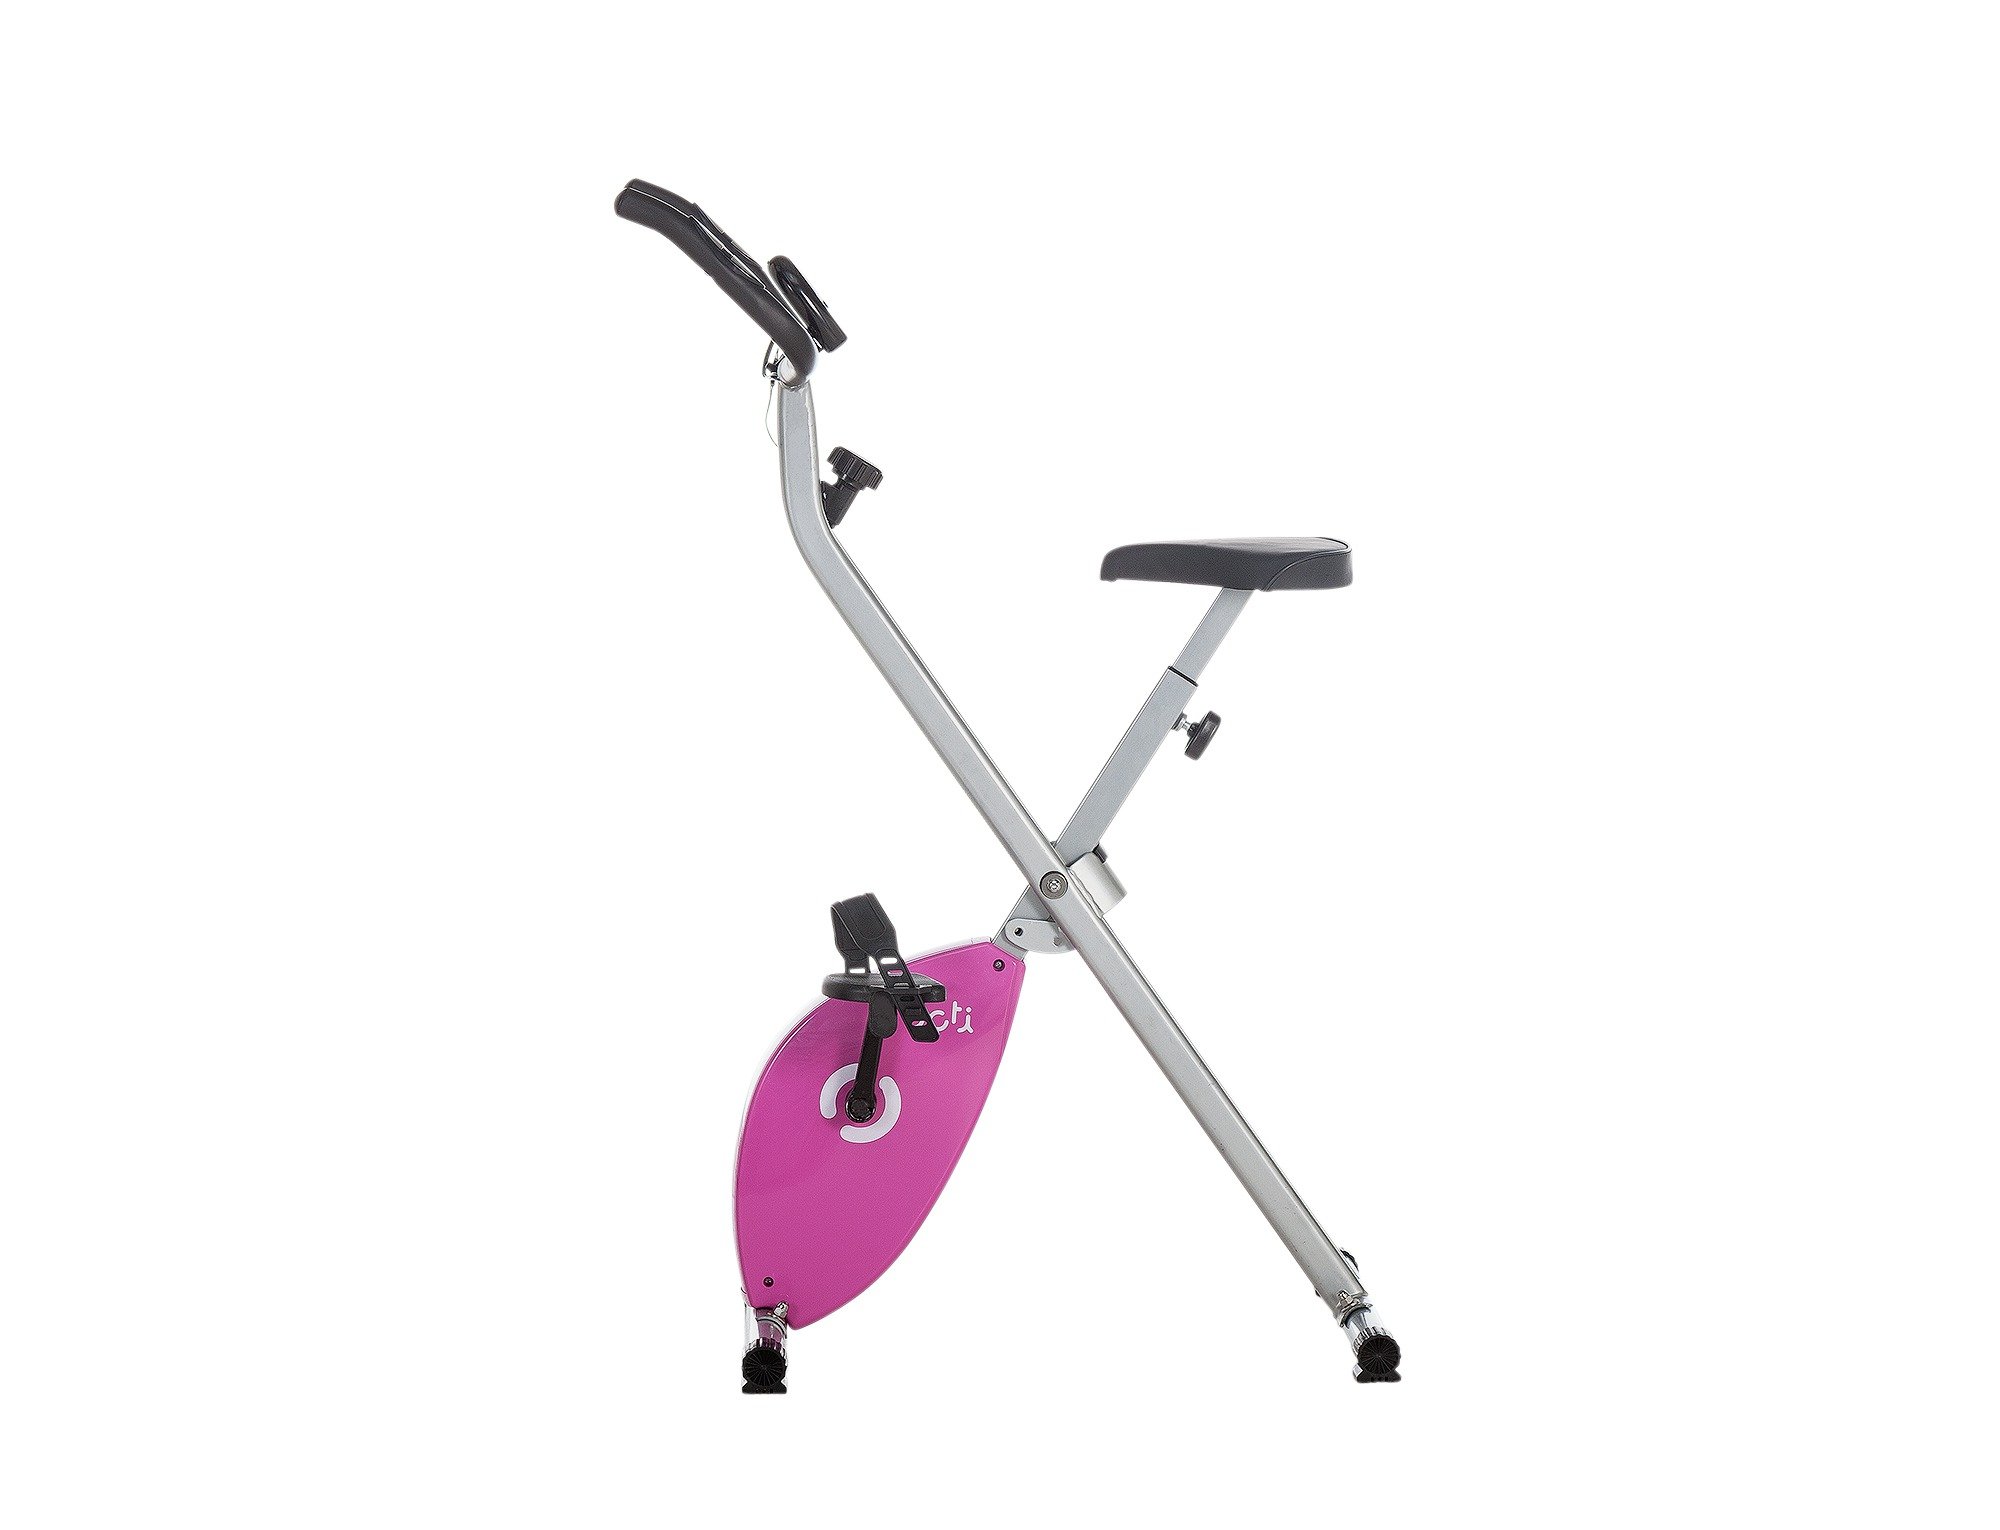 pink opti exercise bike